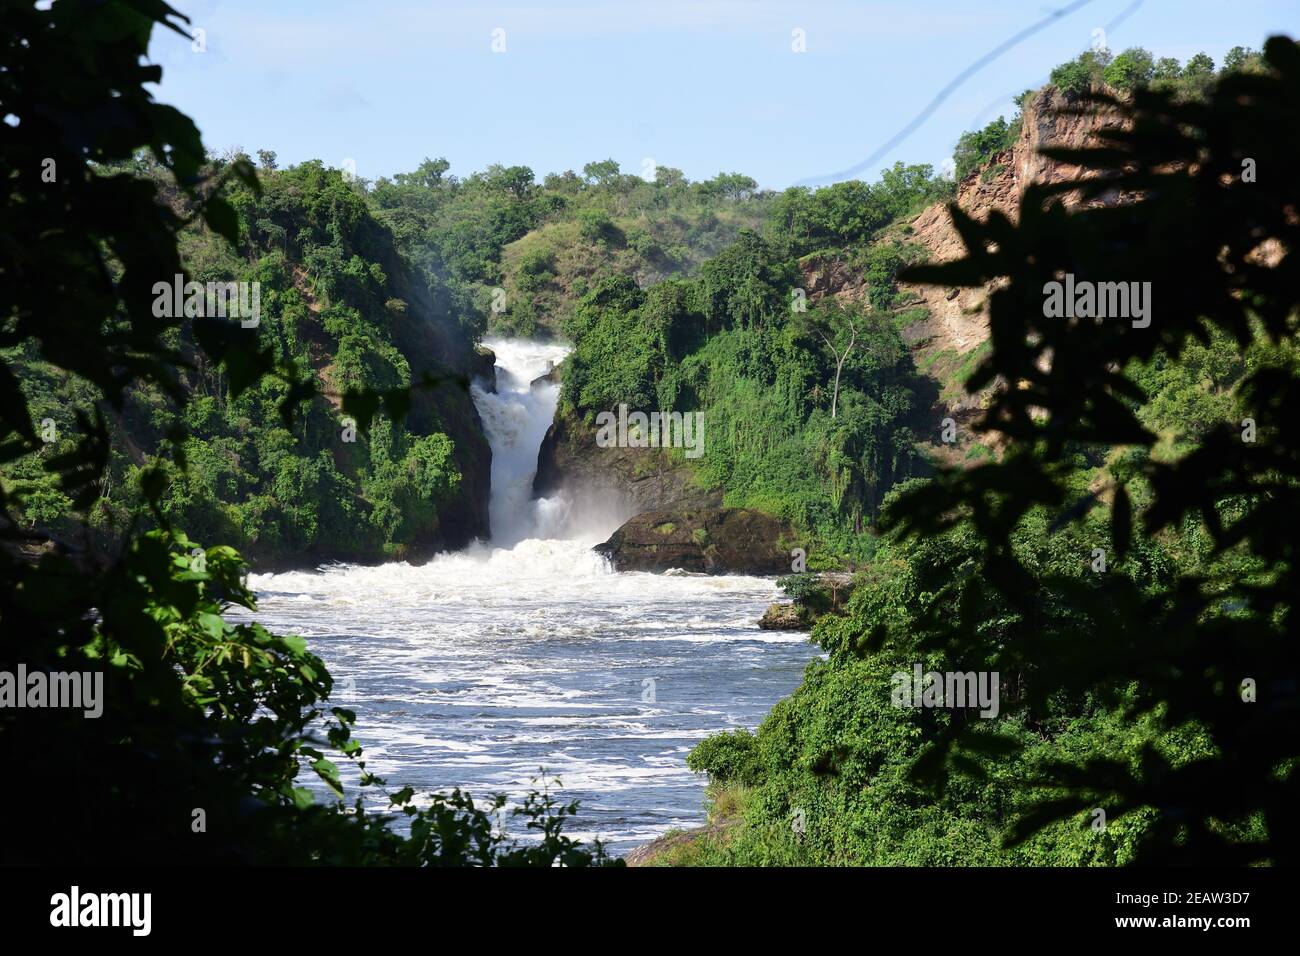 Waterfall in beautiful green forest with white water, rocks, roaring water, Murchison Falls National Park Uganda Stock Photo